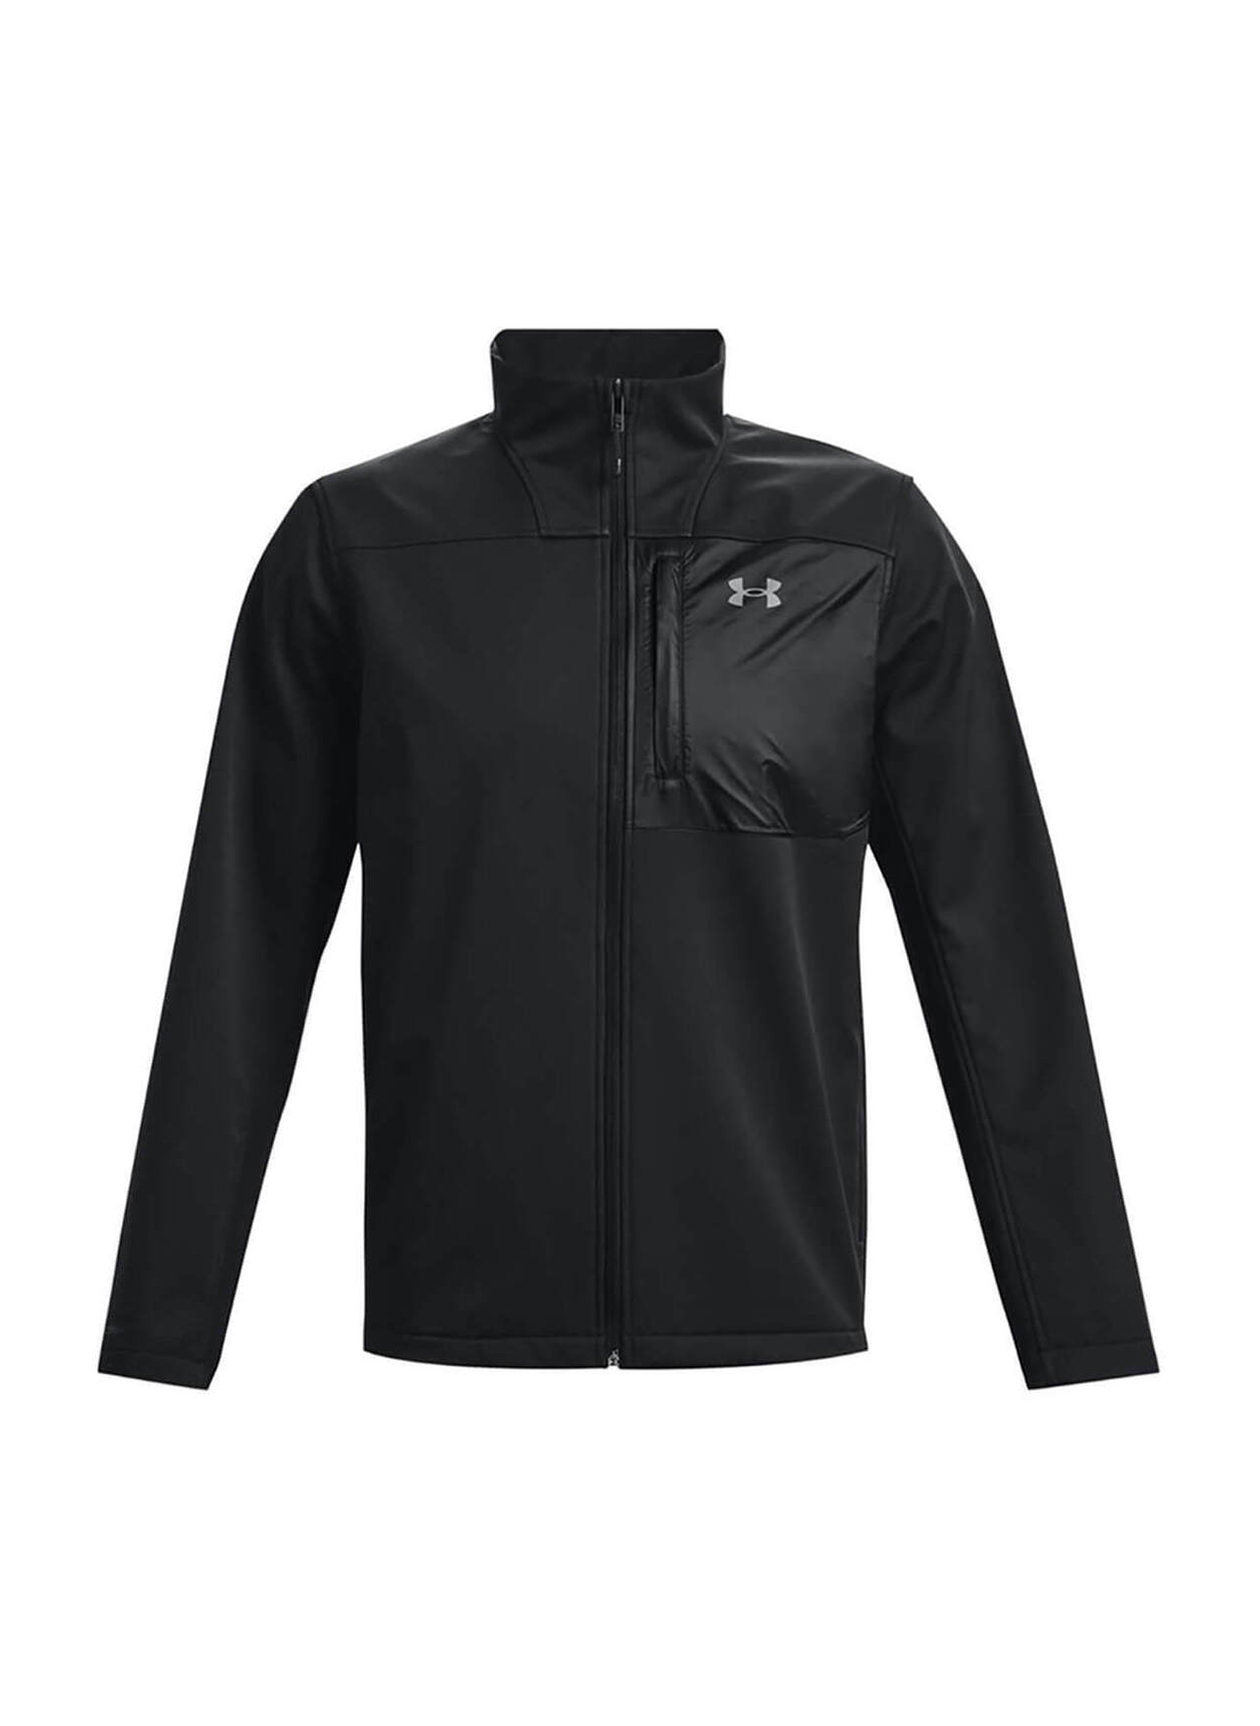 Under Armour Women's Black / Grey ColdGear Infrared Shield 2.0 Hooded Jacket